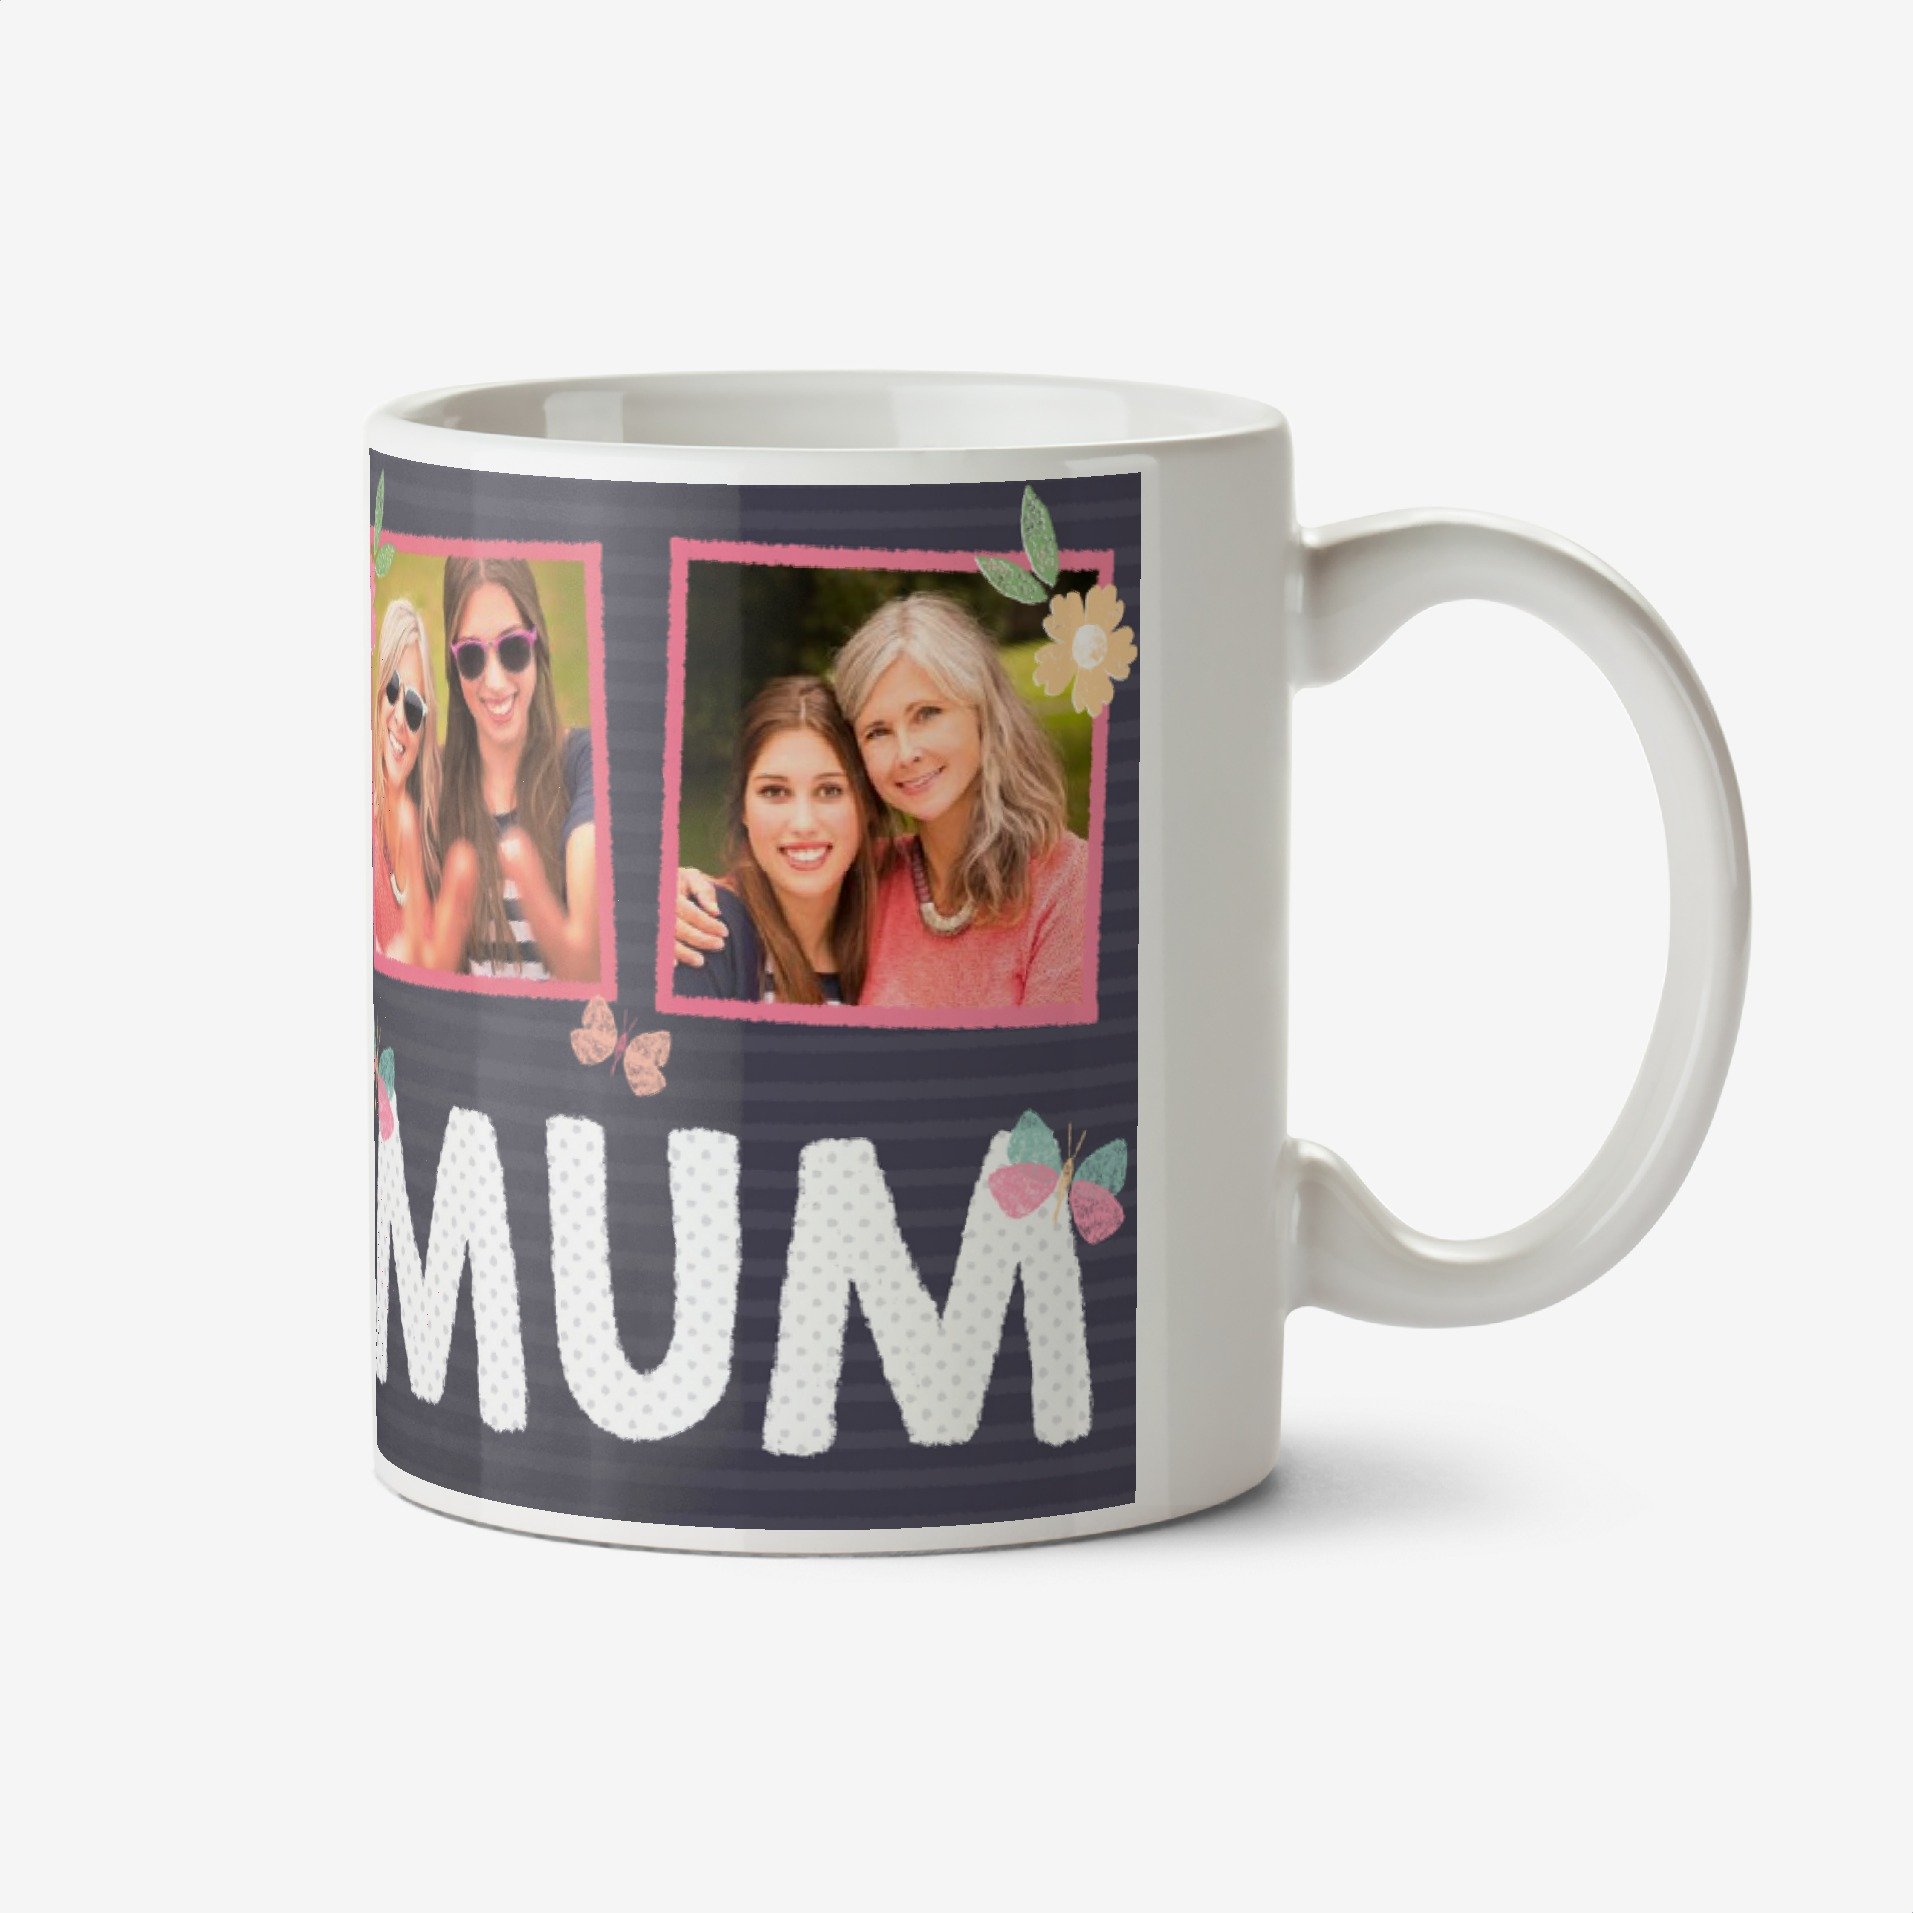 Moonpig Mum Mug - Photo Upload Ceramic Mug